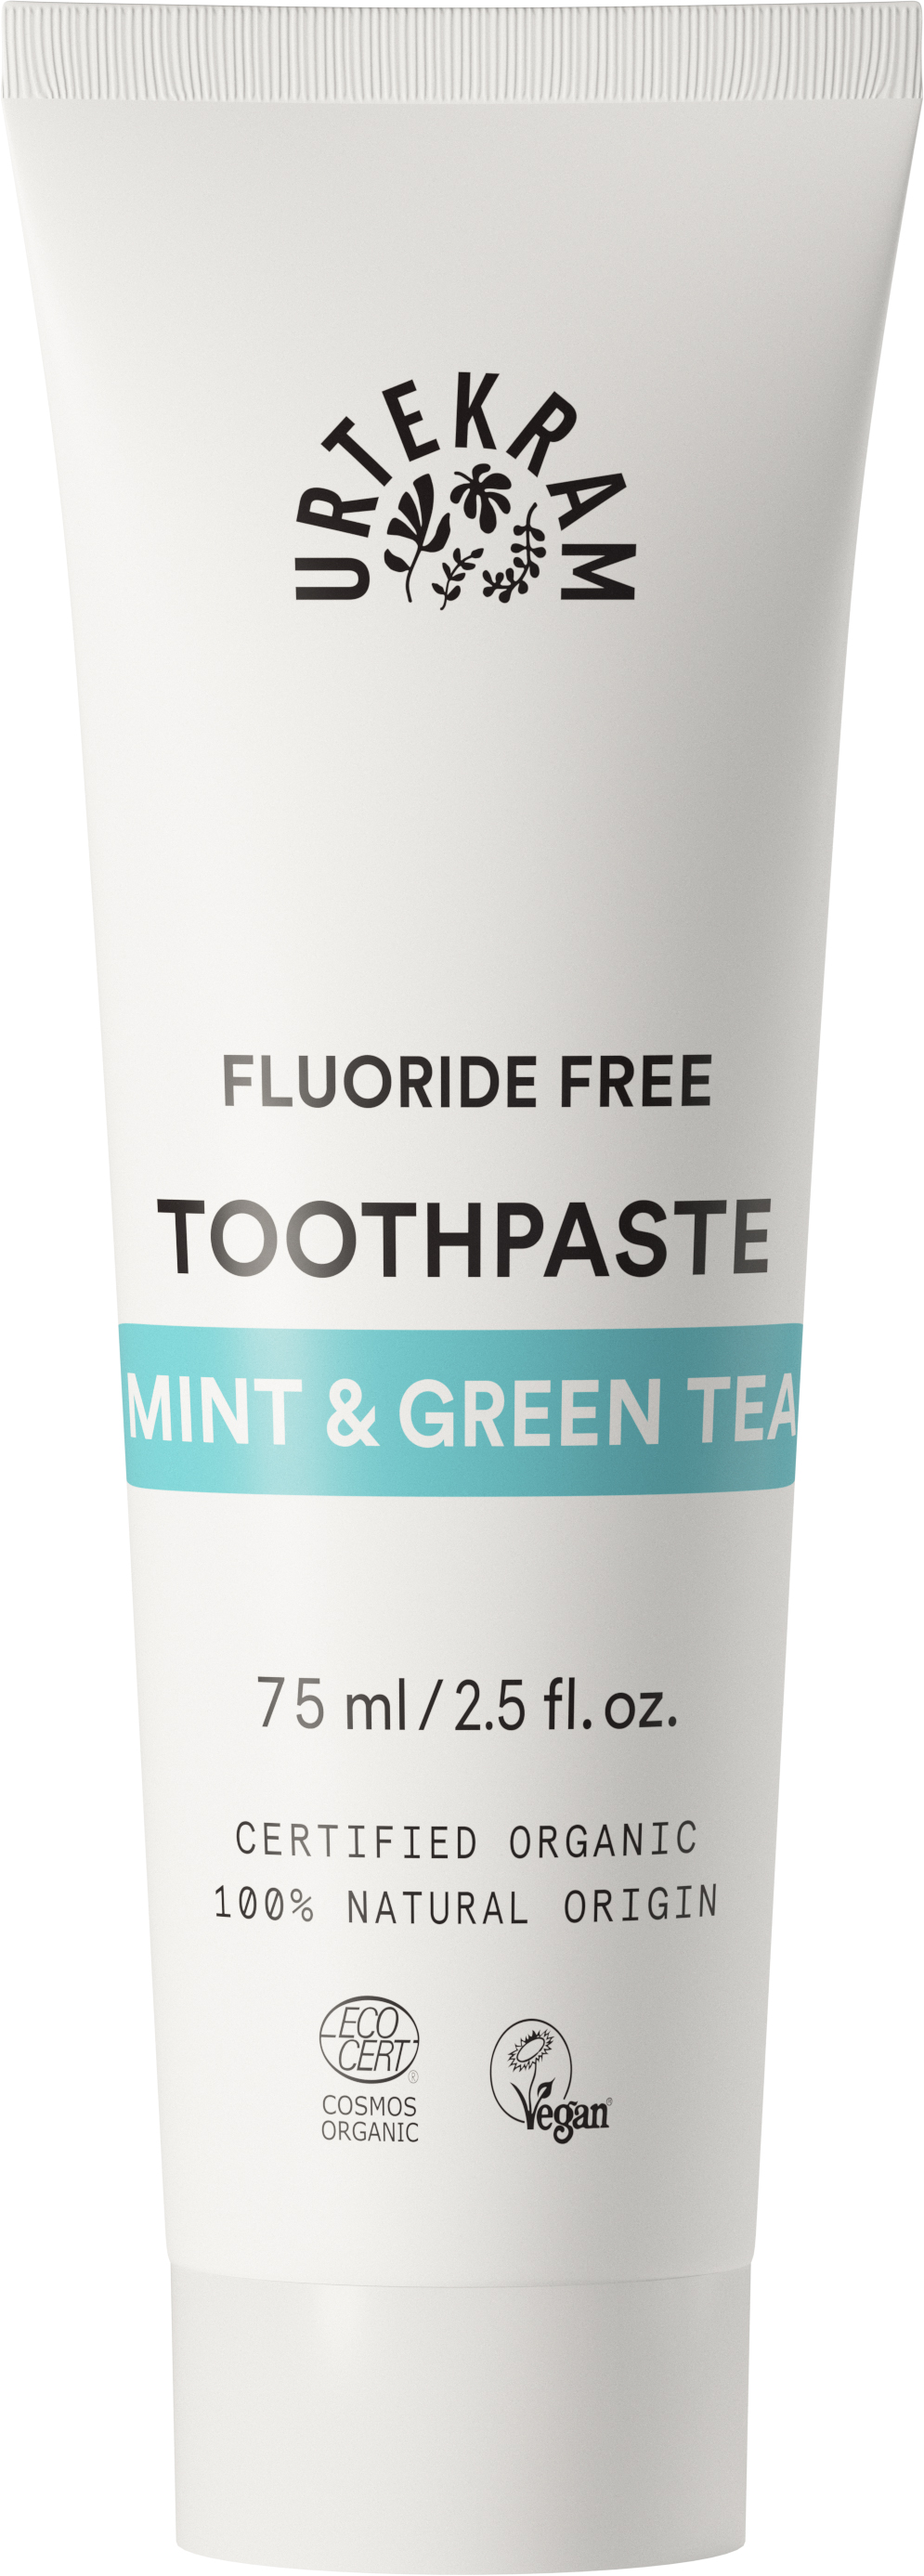 Mint & Green Tea Toothpaste (z.fluoride) - Urtekram